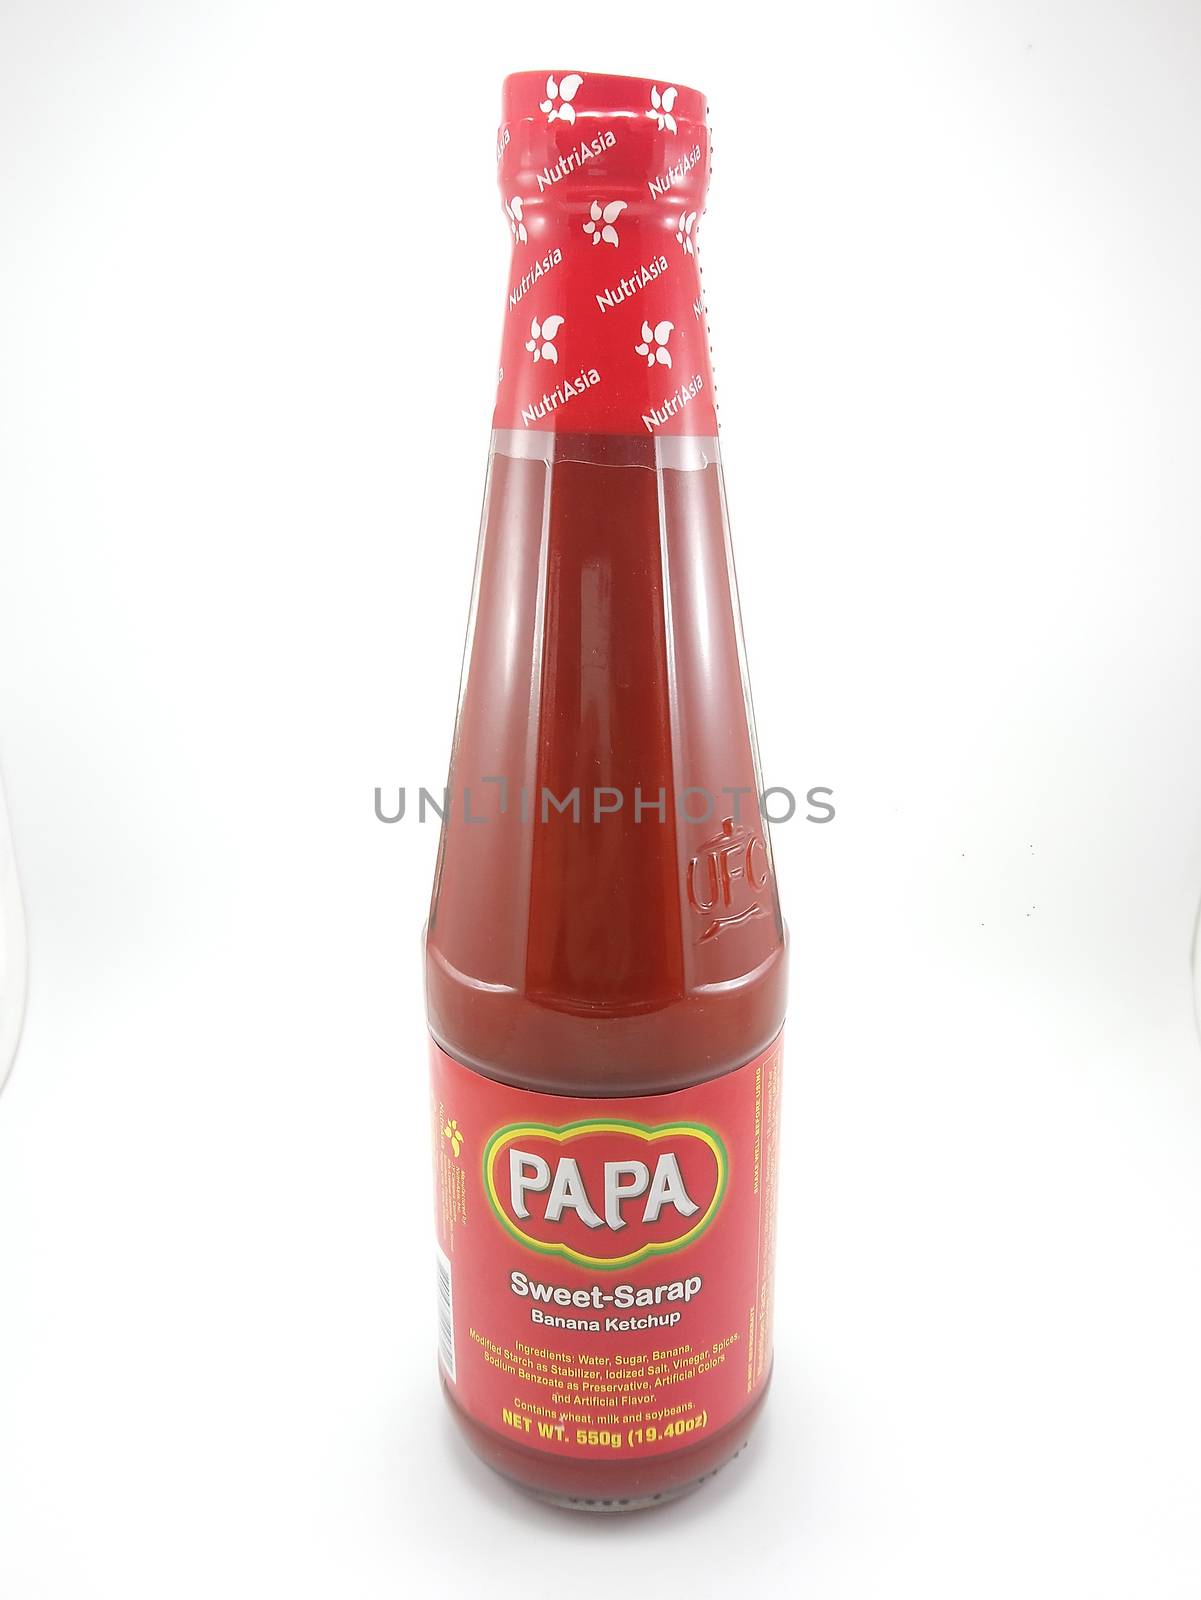 MANILA, PH - SEPT 25 - Papa banana ketchup bottle on September 25, 2020 in Manila, Philippines.